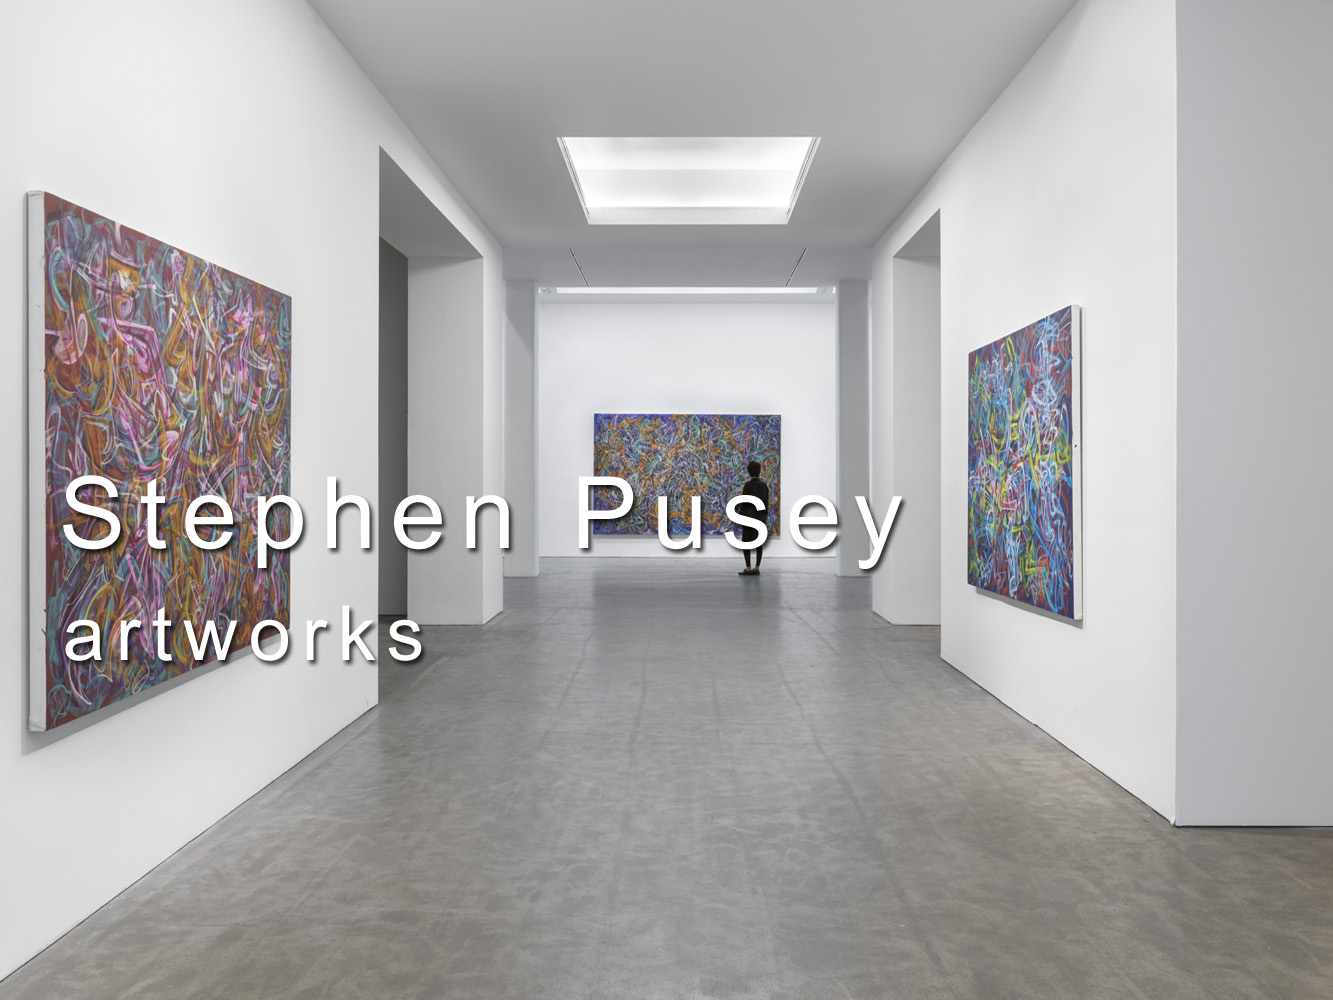 Stephen Pusey artworks